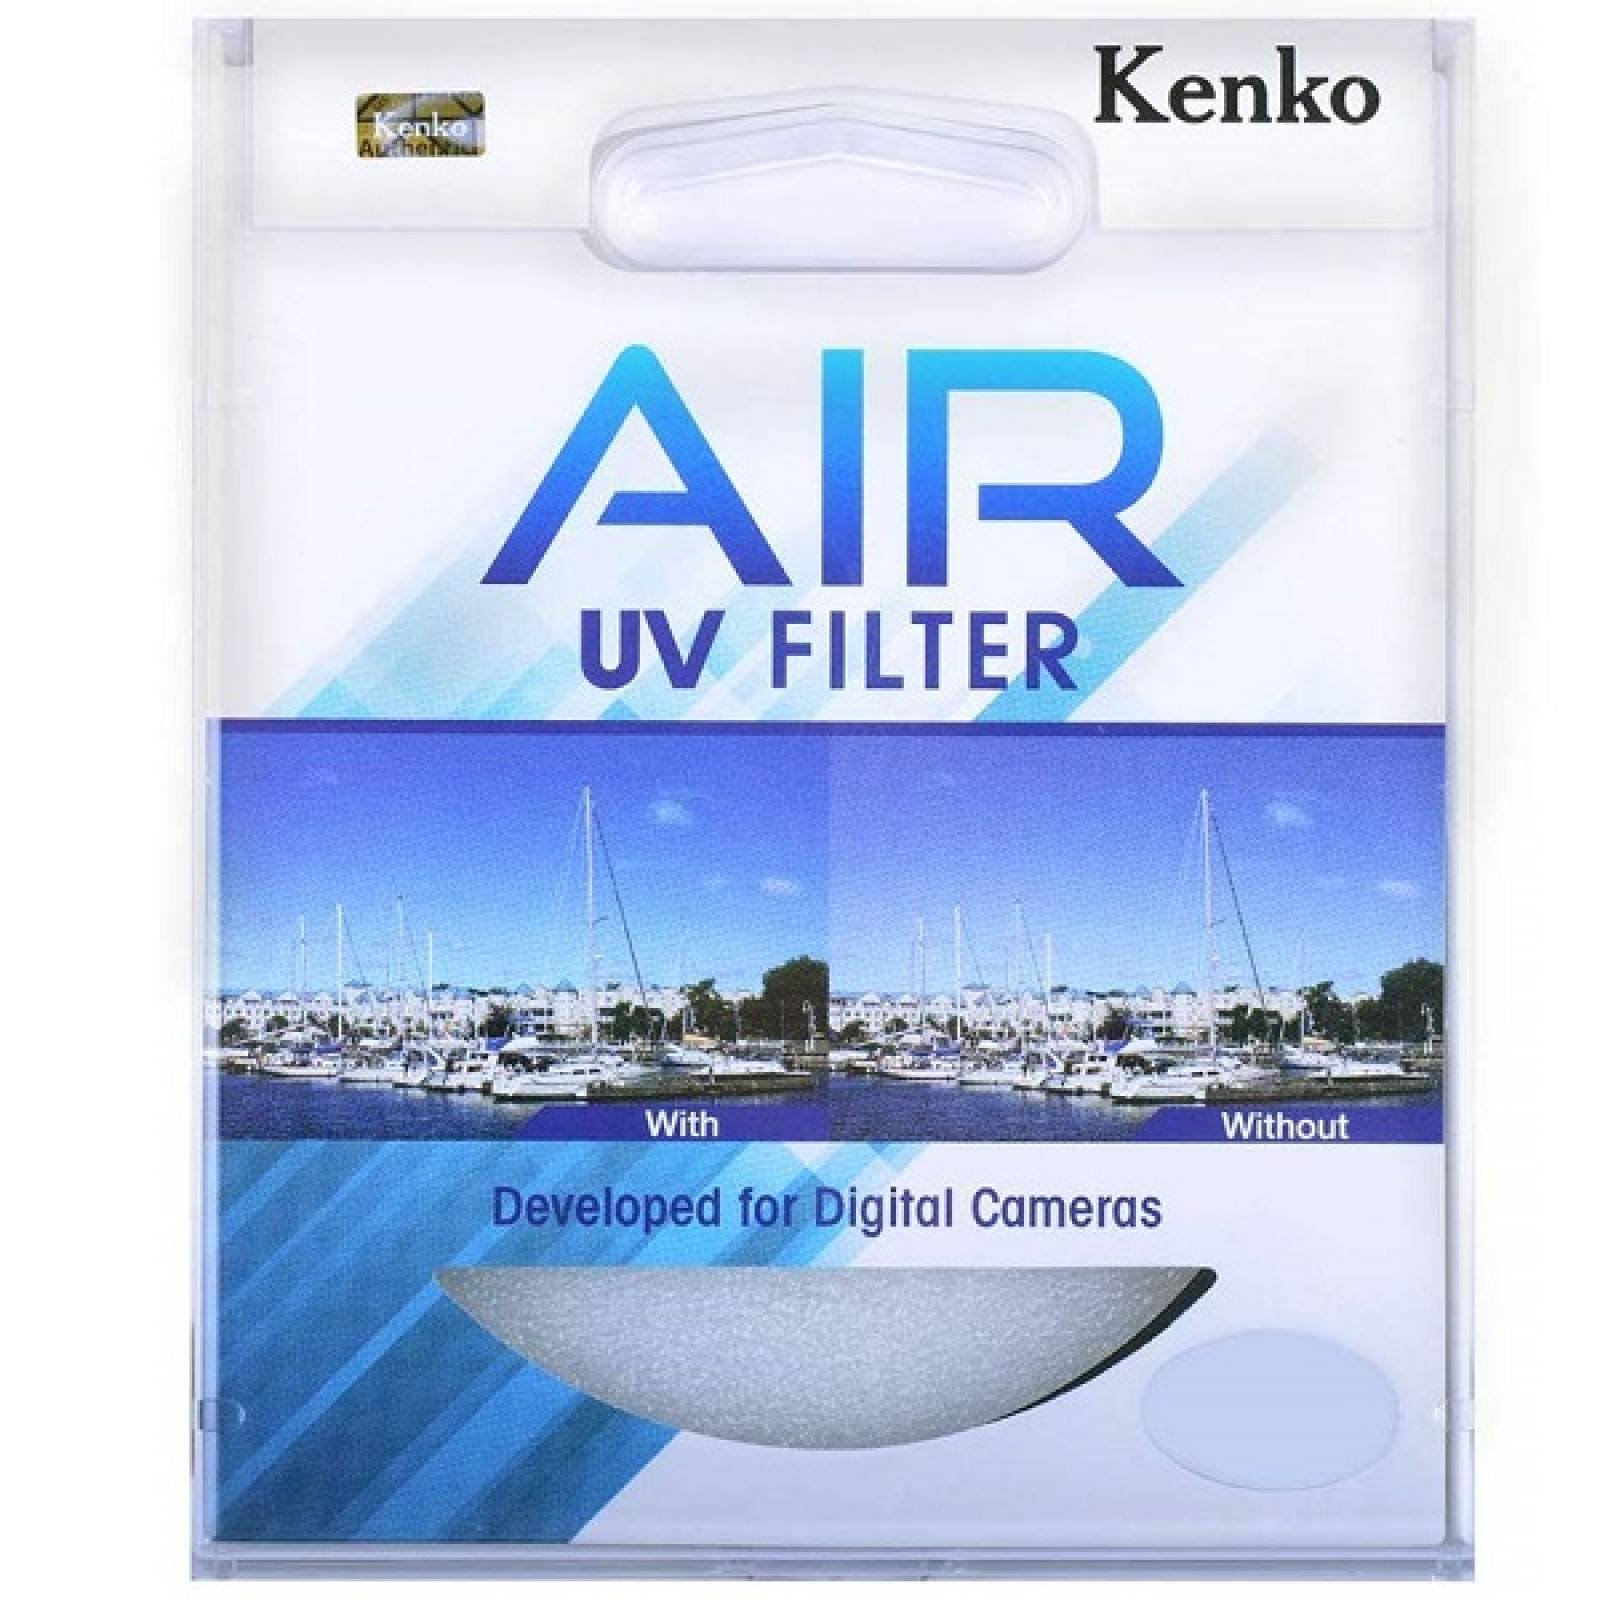 Filtro UV Air Kenko 49mm modelo 224993